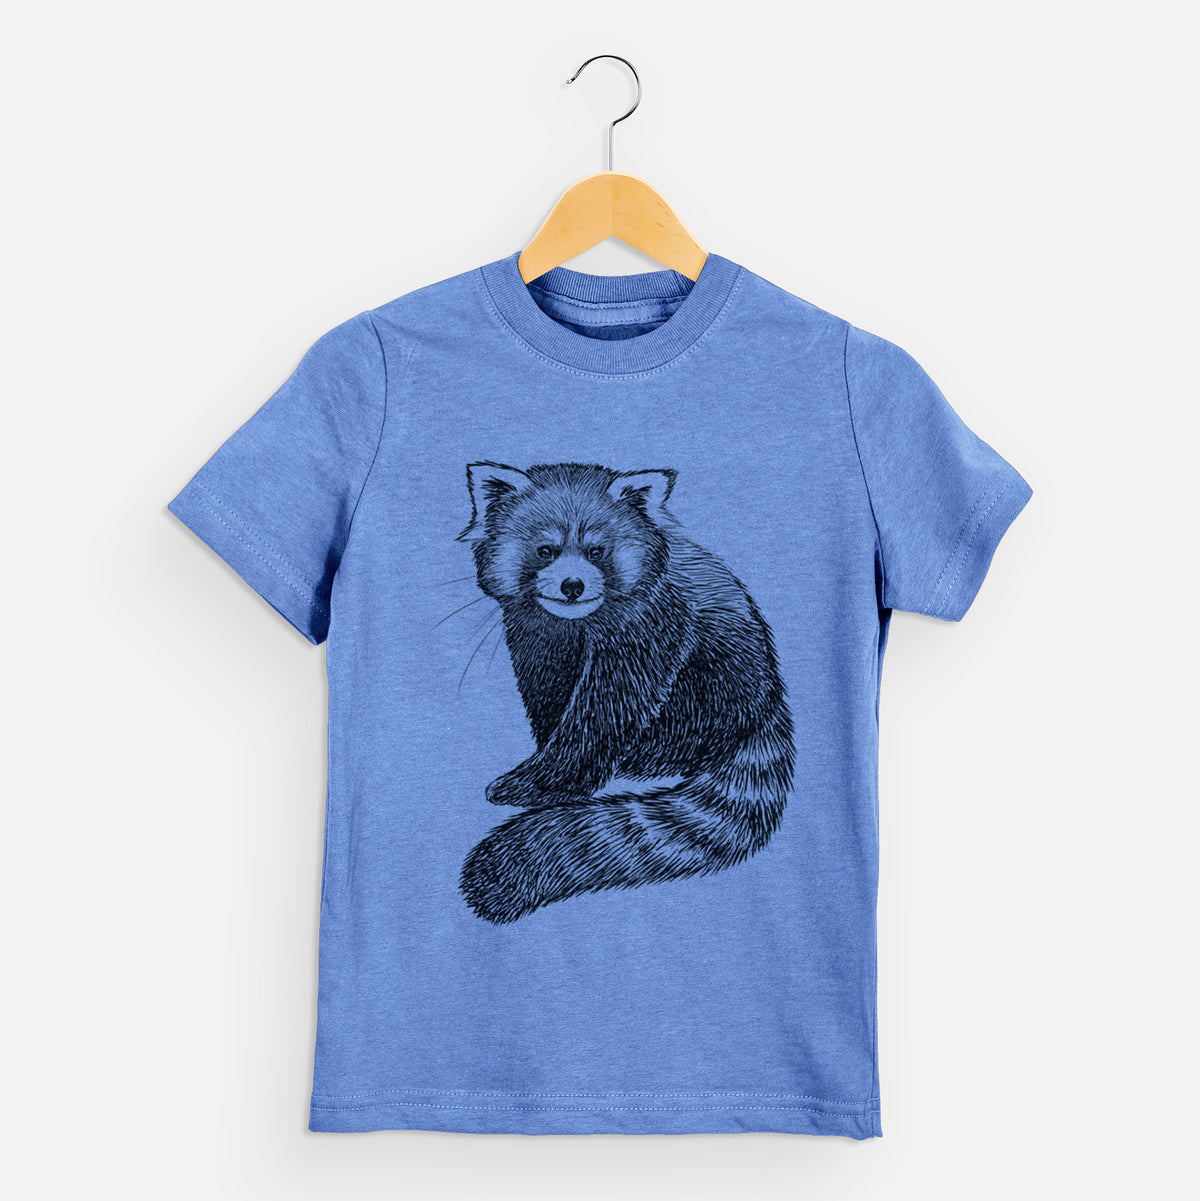 Red Panda - Ailurus fulgens styani - Kids Shirt